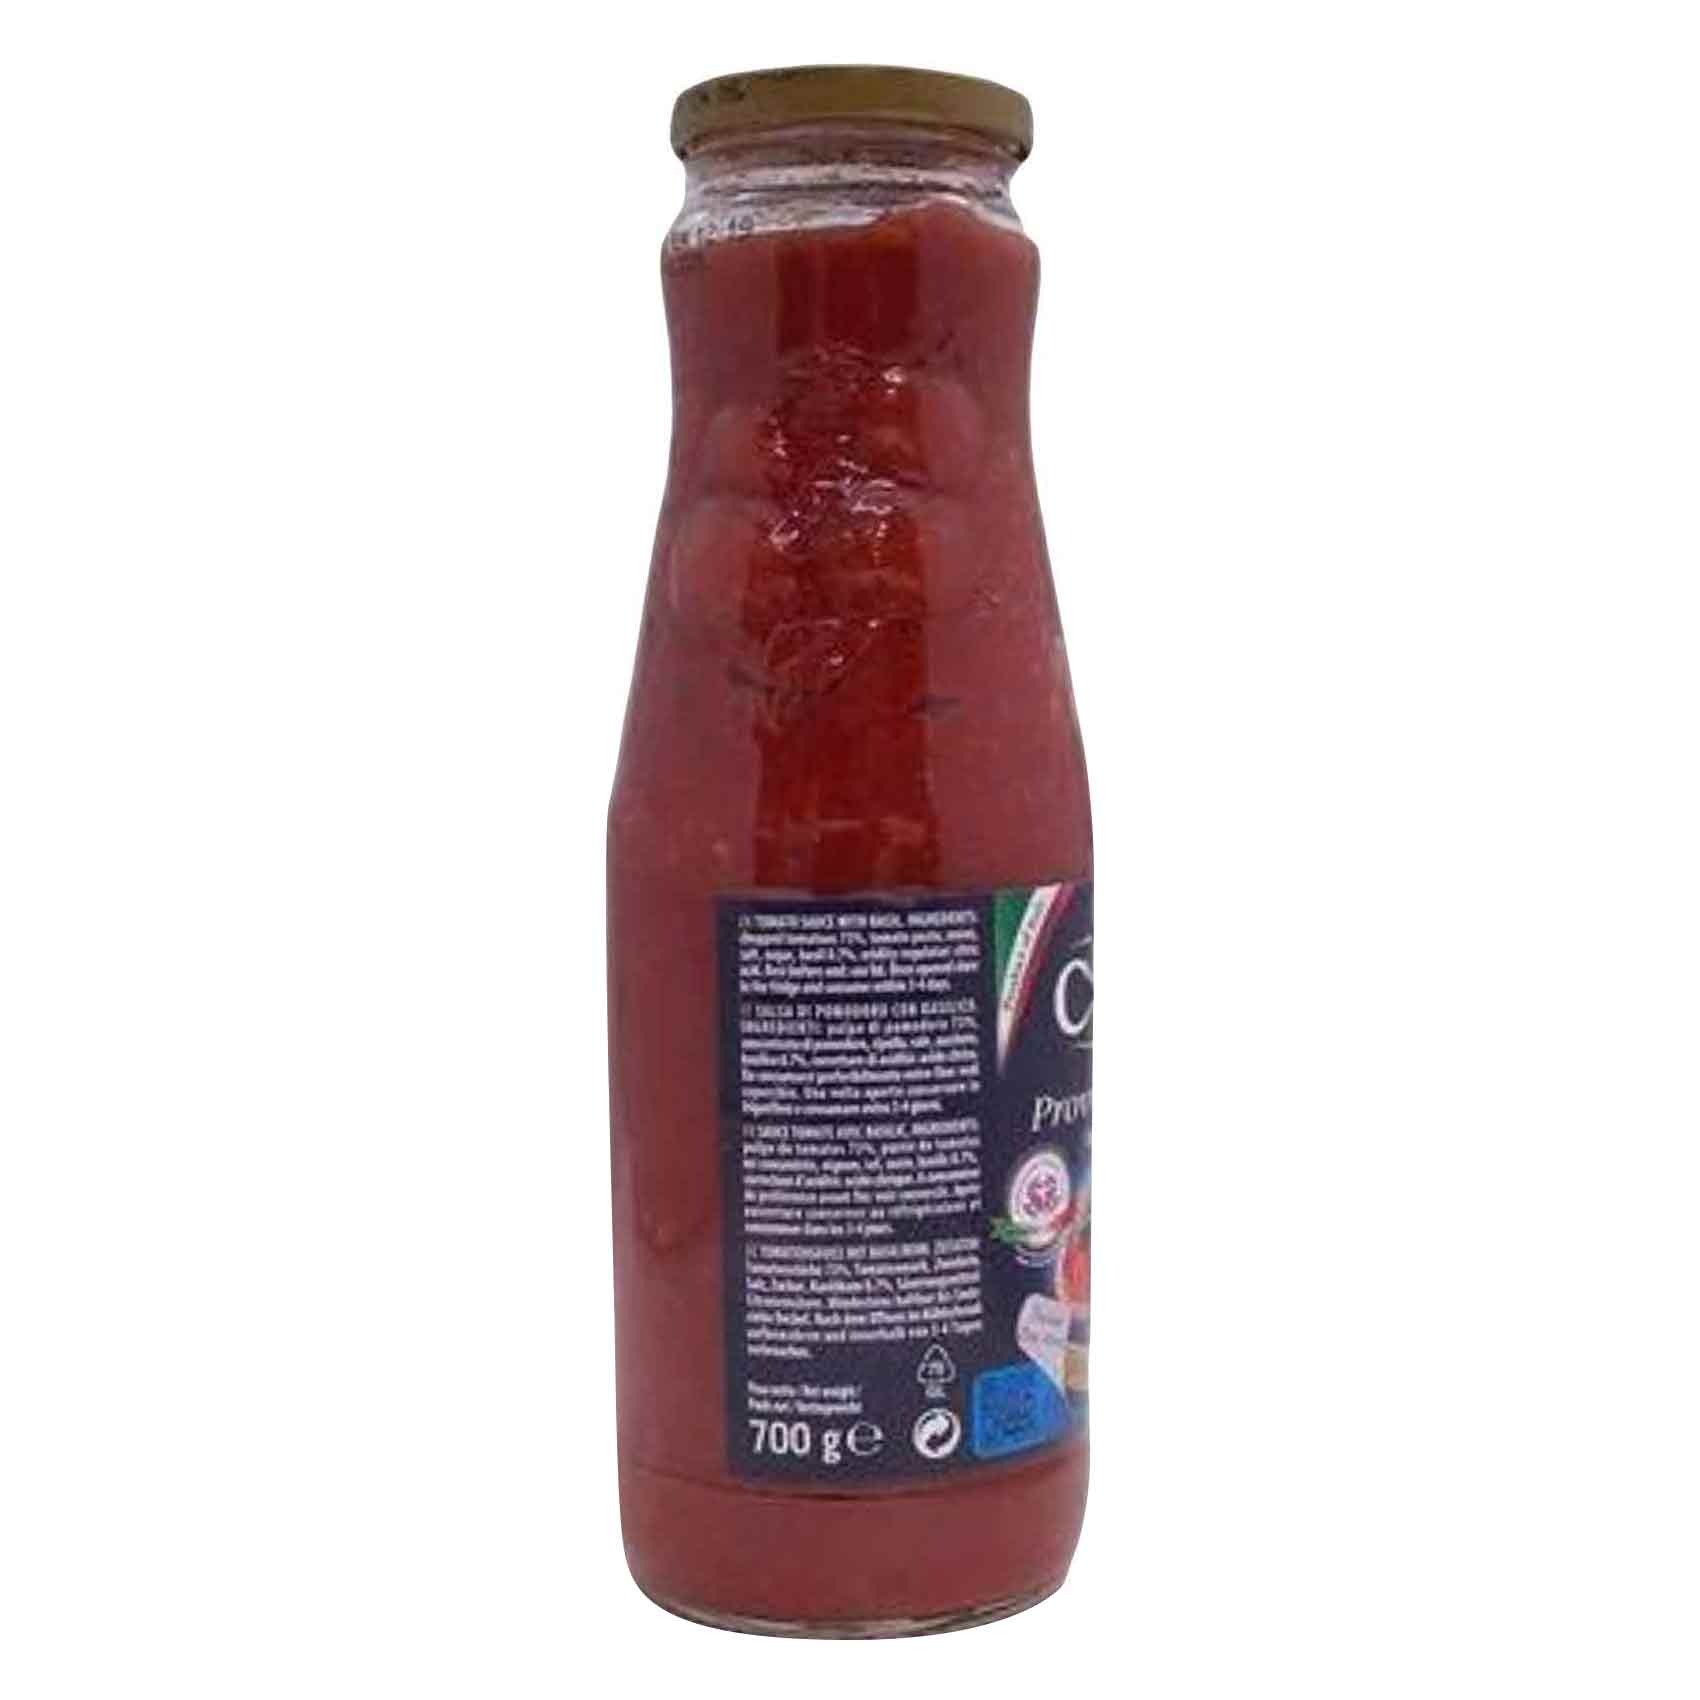 Cirio Provvista Sugo Tomato Basil Sauce 700g